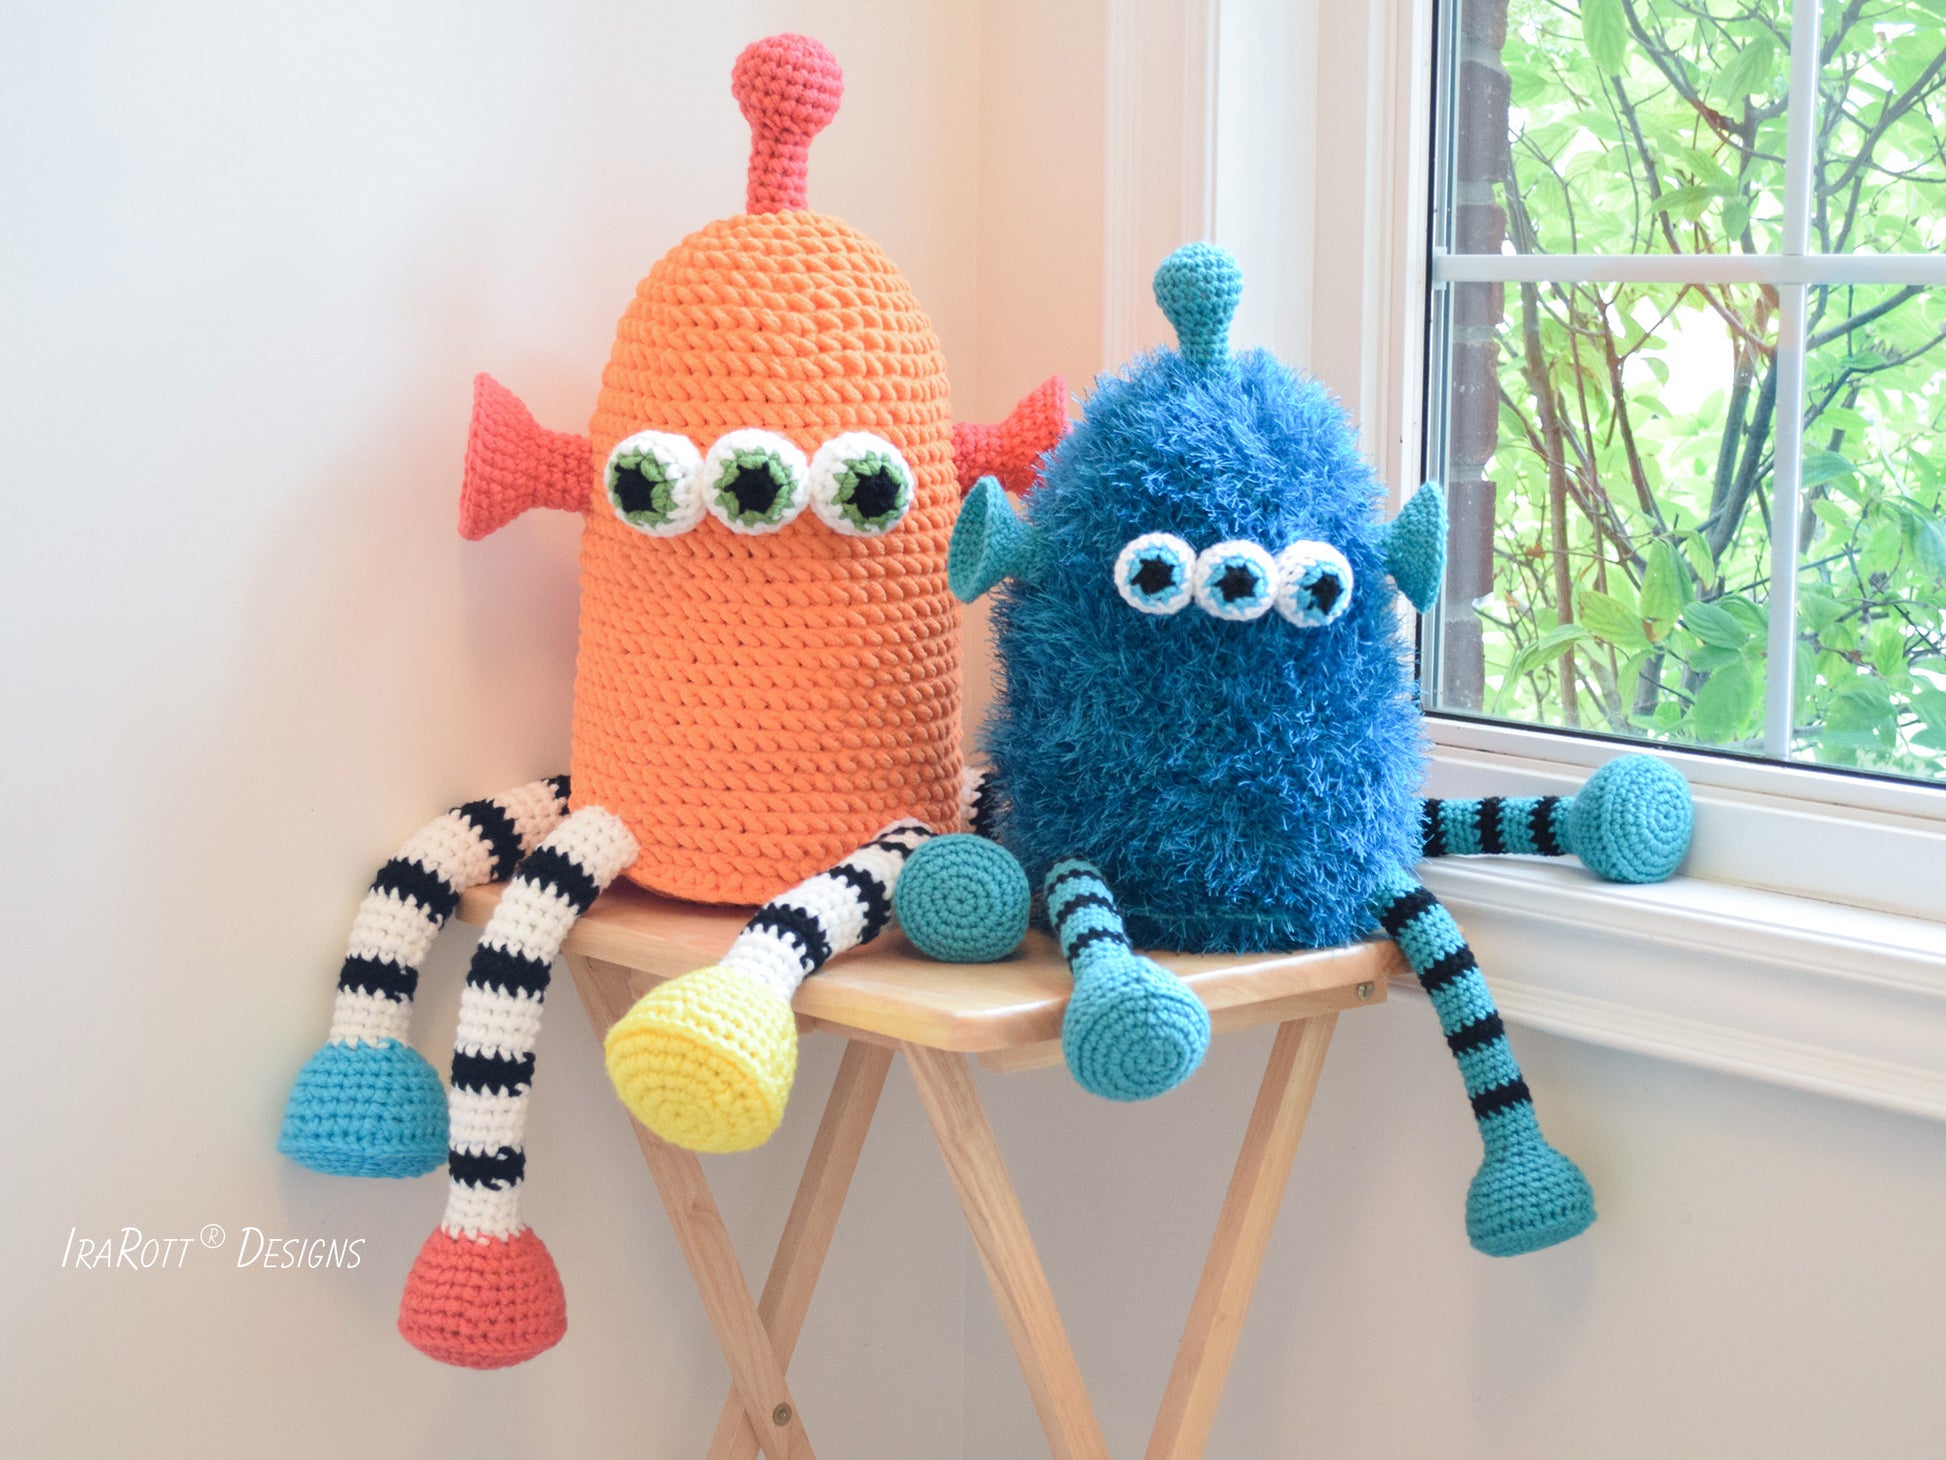 Crochet Pattern Monsters, Easy to Follow Amigurumi, Mini Amigurumi